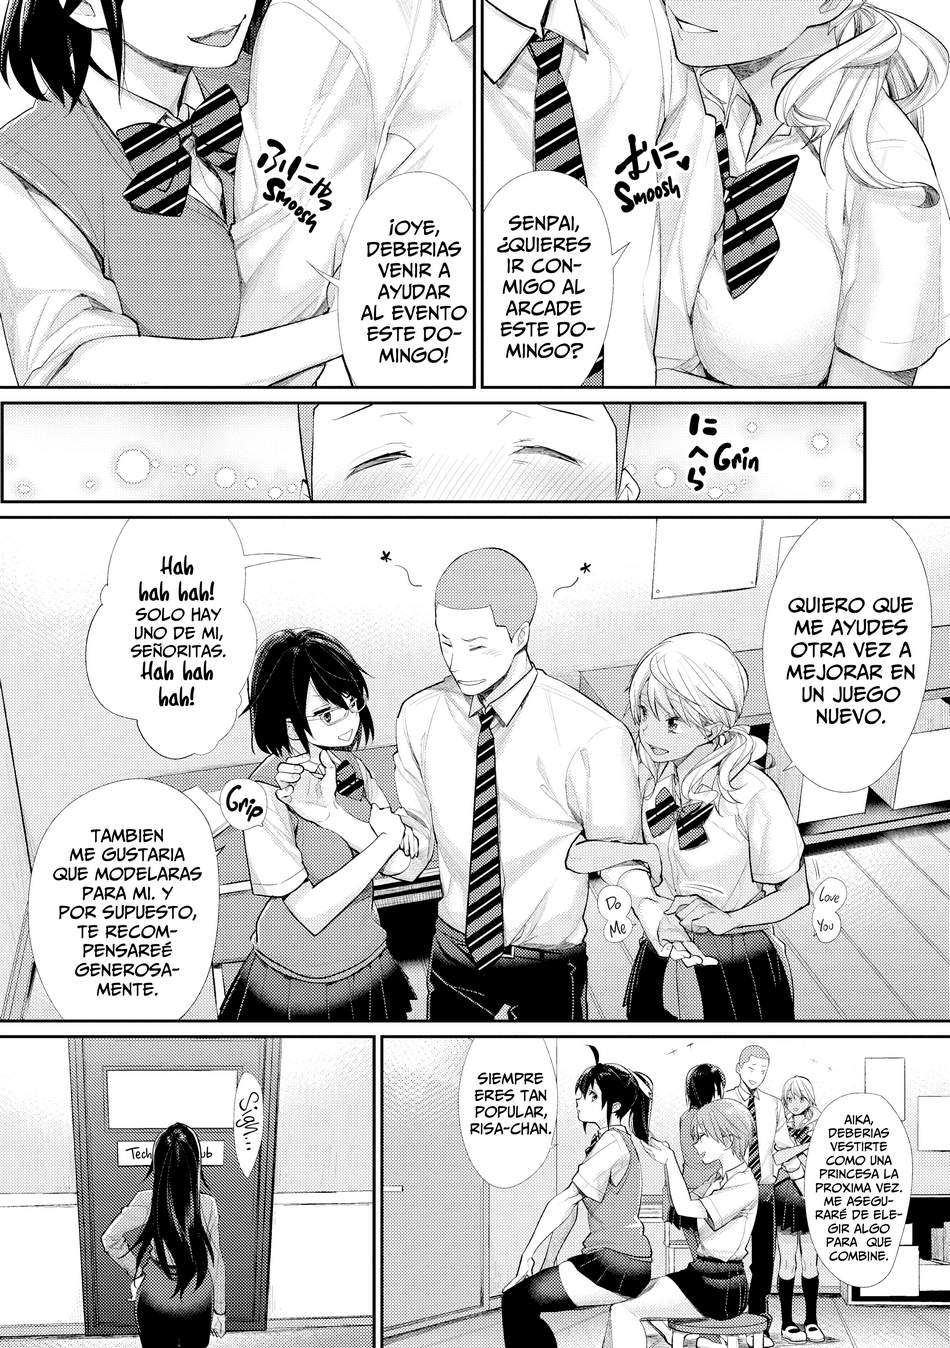 Prince of the Female Otaku Club #3 - Page #1